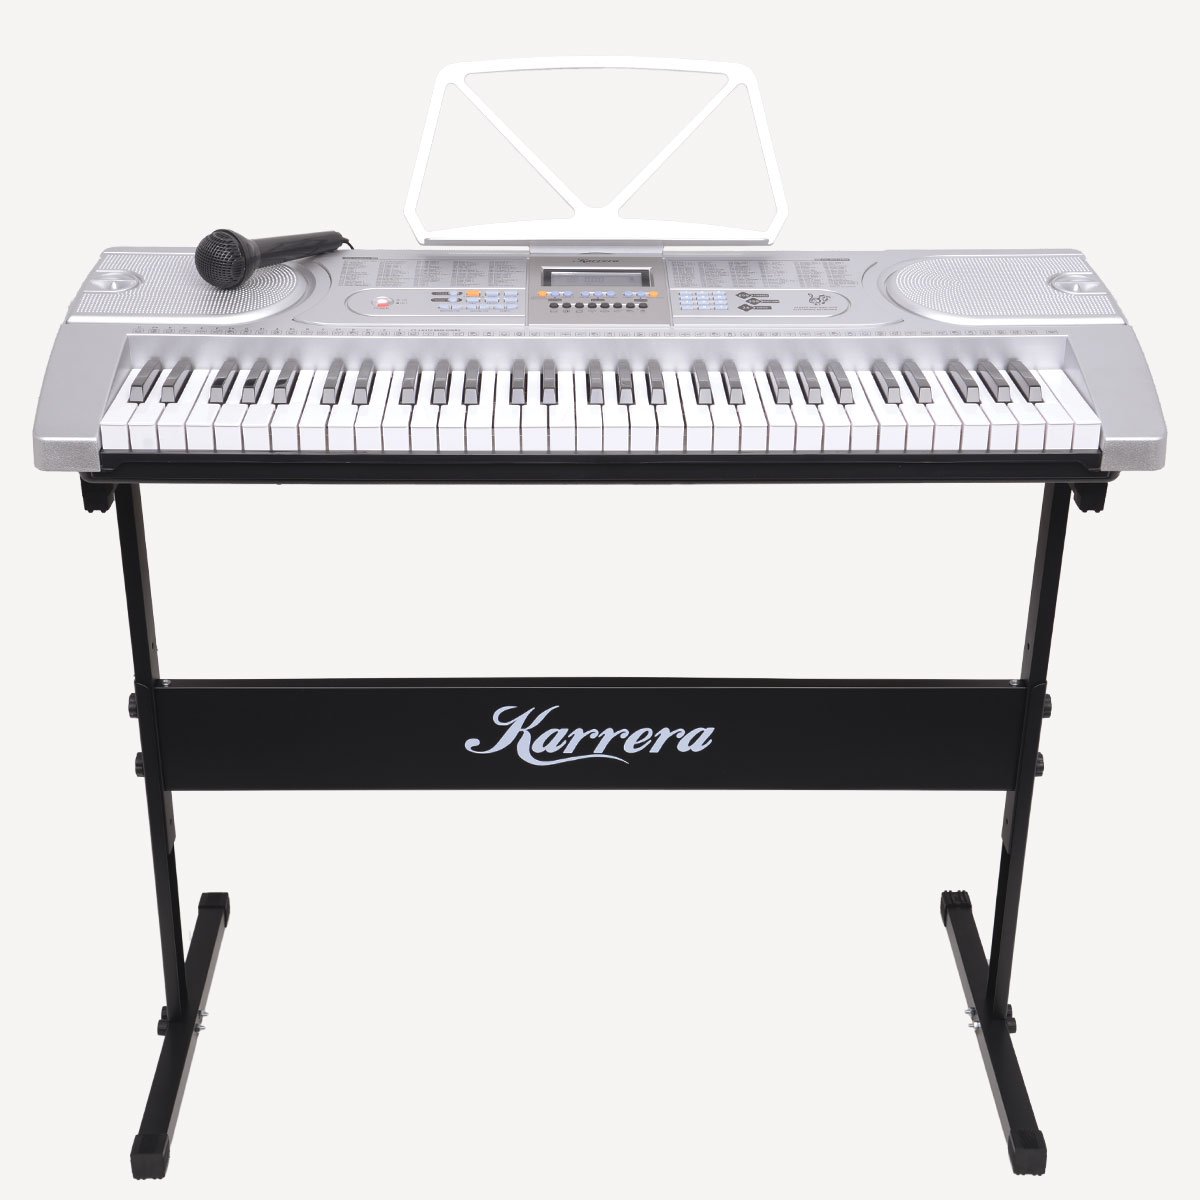 Karrera 61 Keys Electronic Keyboard Piano with Stand - Silver 2